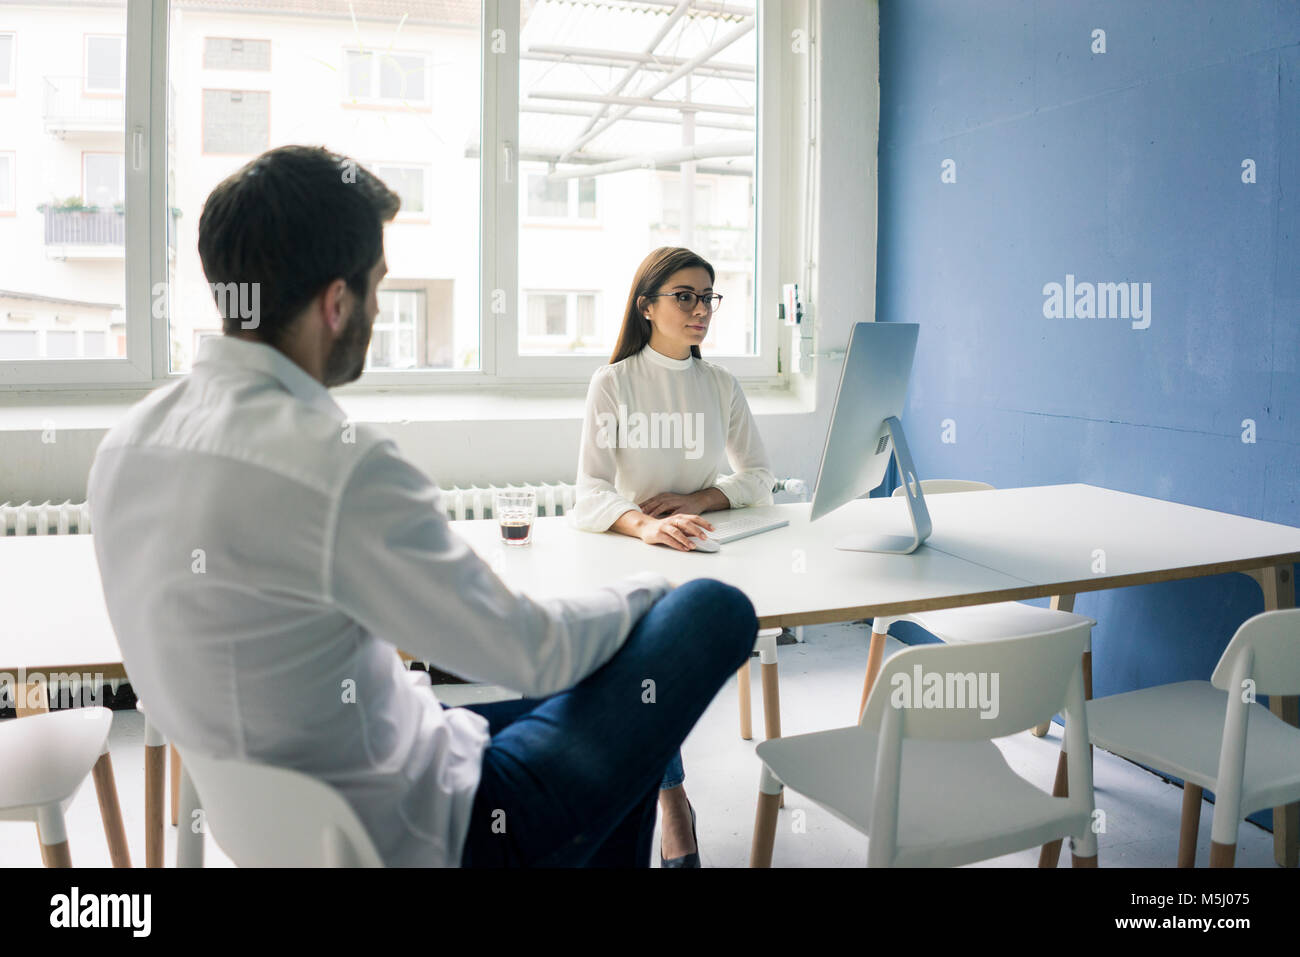 Hombre sentado frente a la mujer que usa equipo de oficina Foto de stock